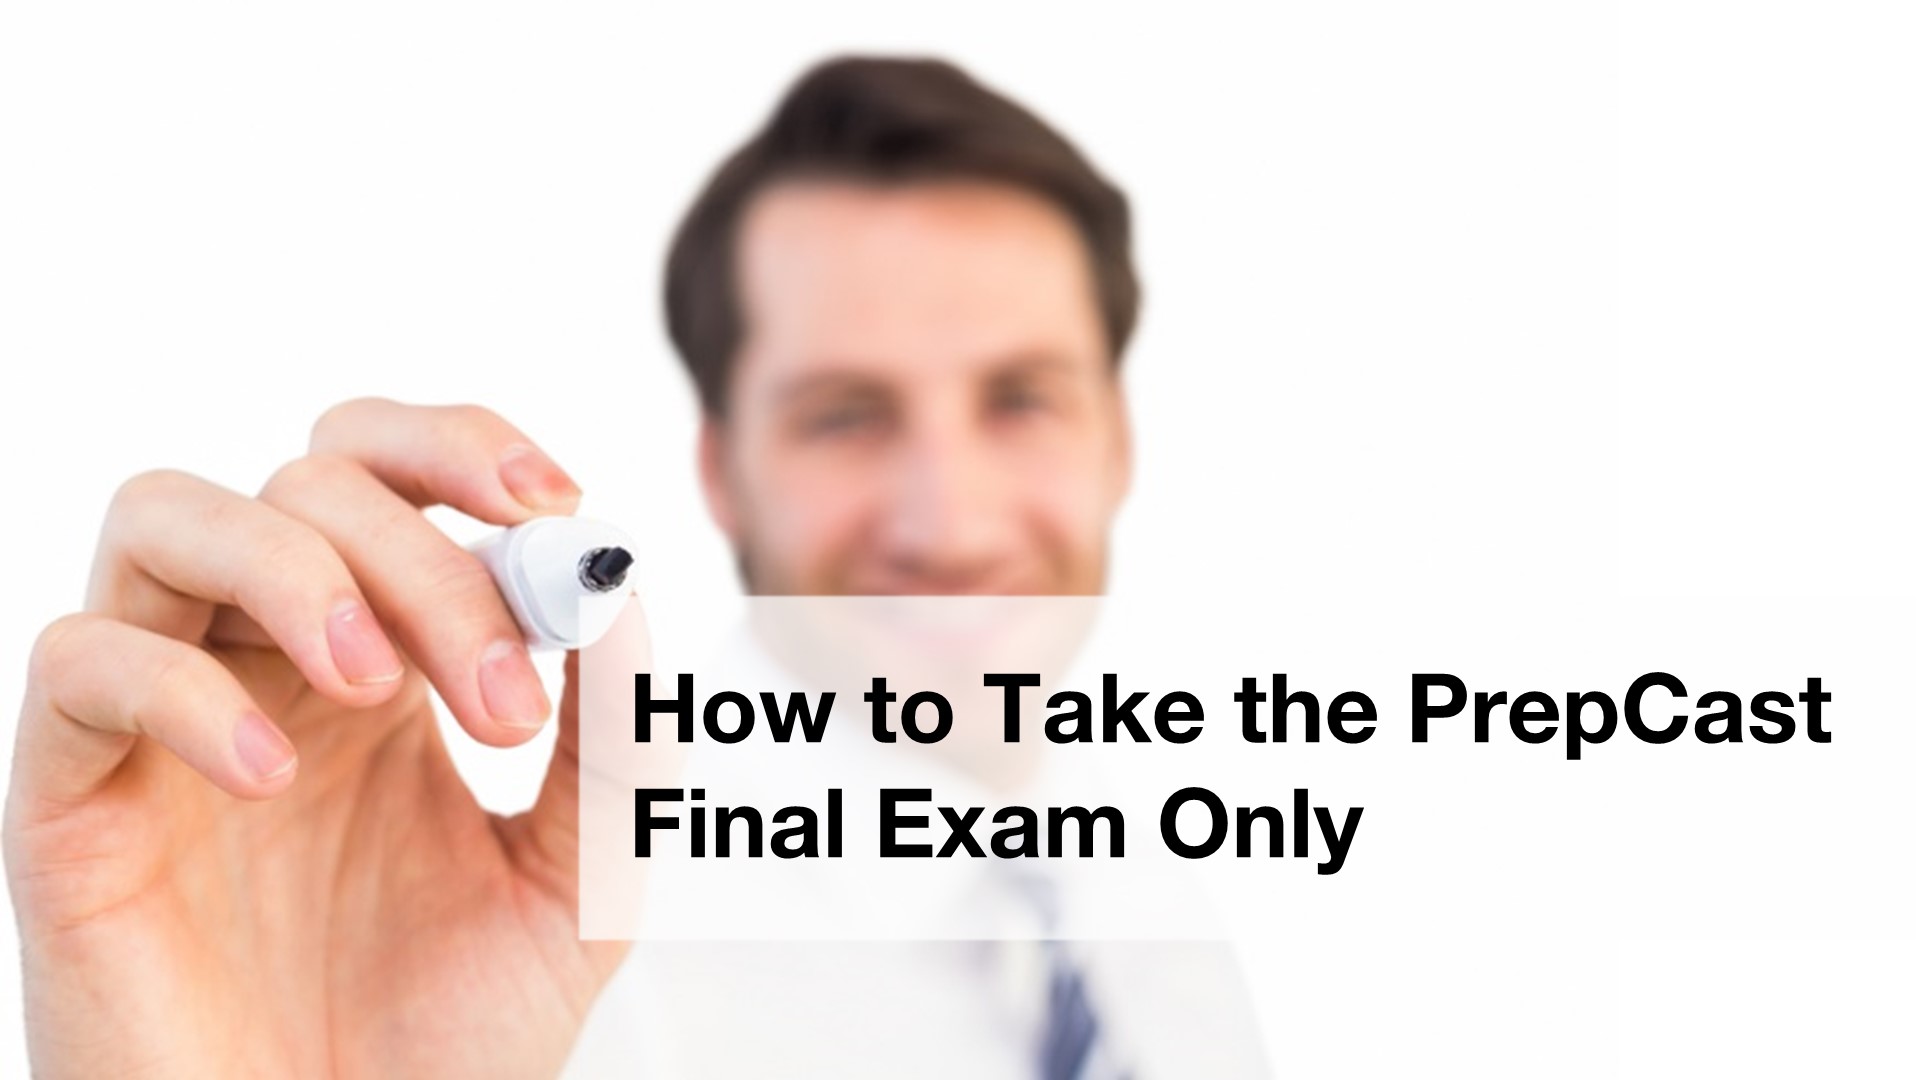 prepcast_how_to_take_final_exam_only.jpg - 128.01 kB